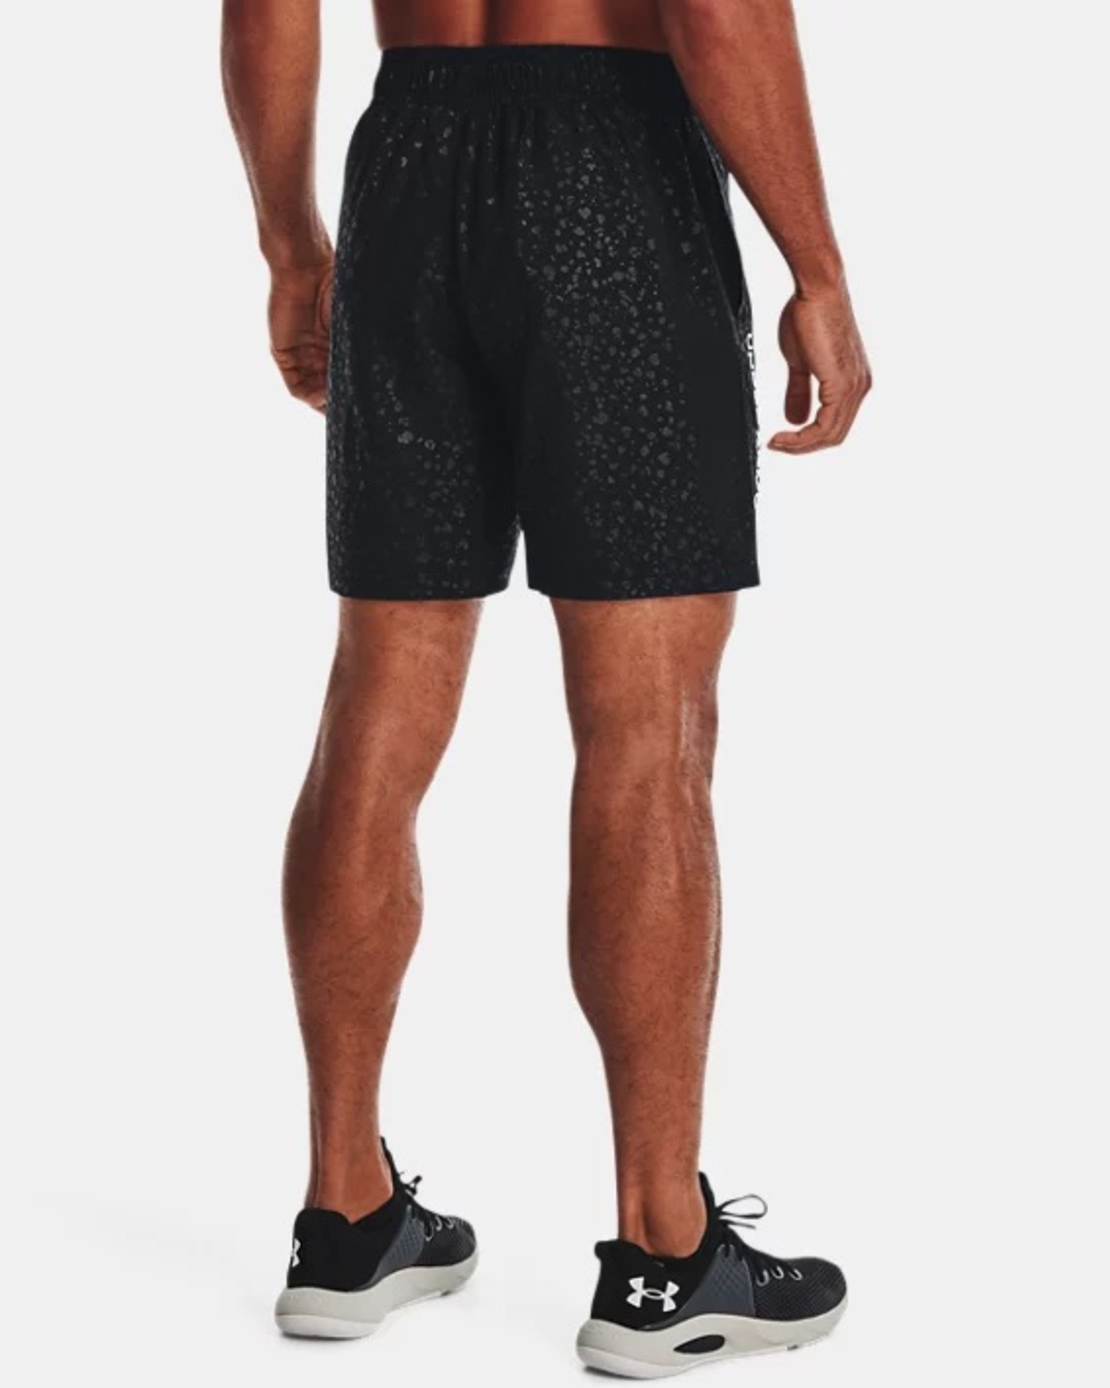 שורט אנדר ארמור לגברים | Under Armour Men's Woven Emboss Shorts